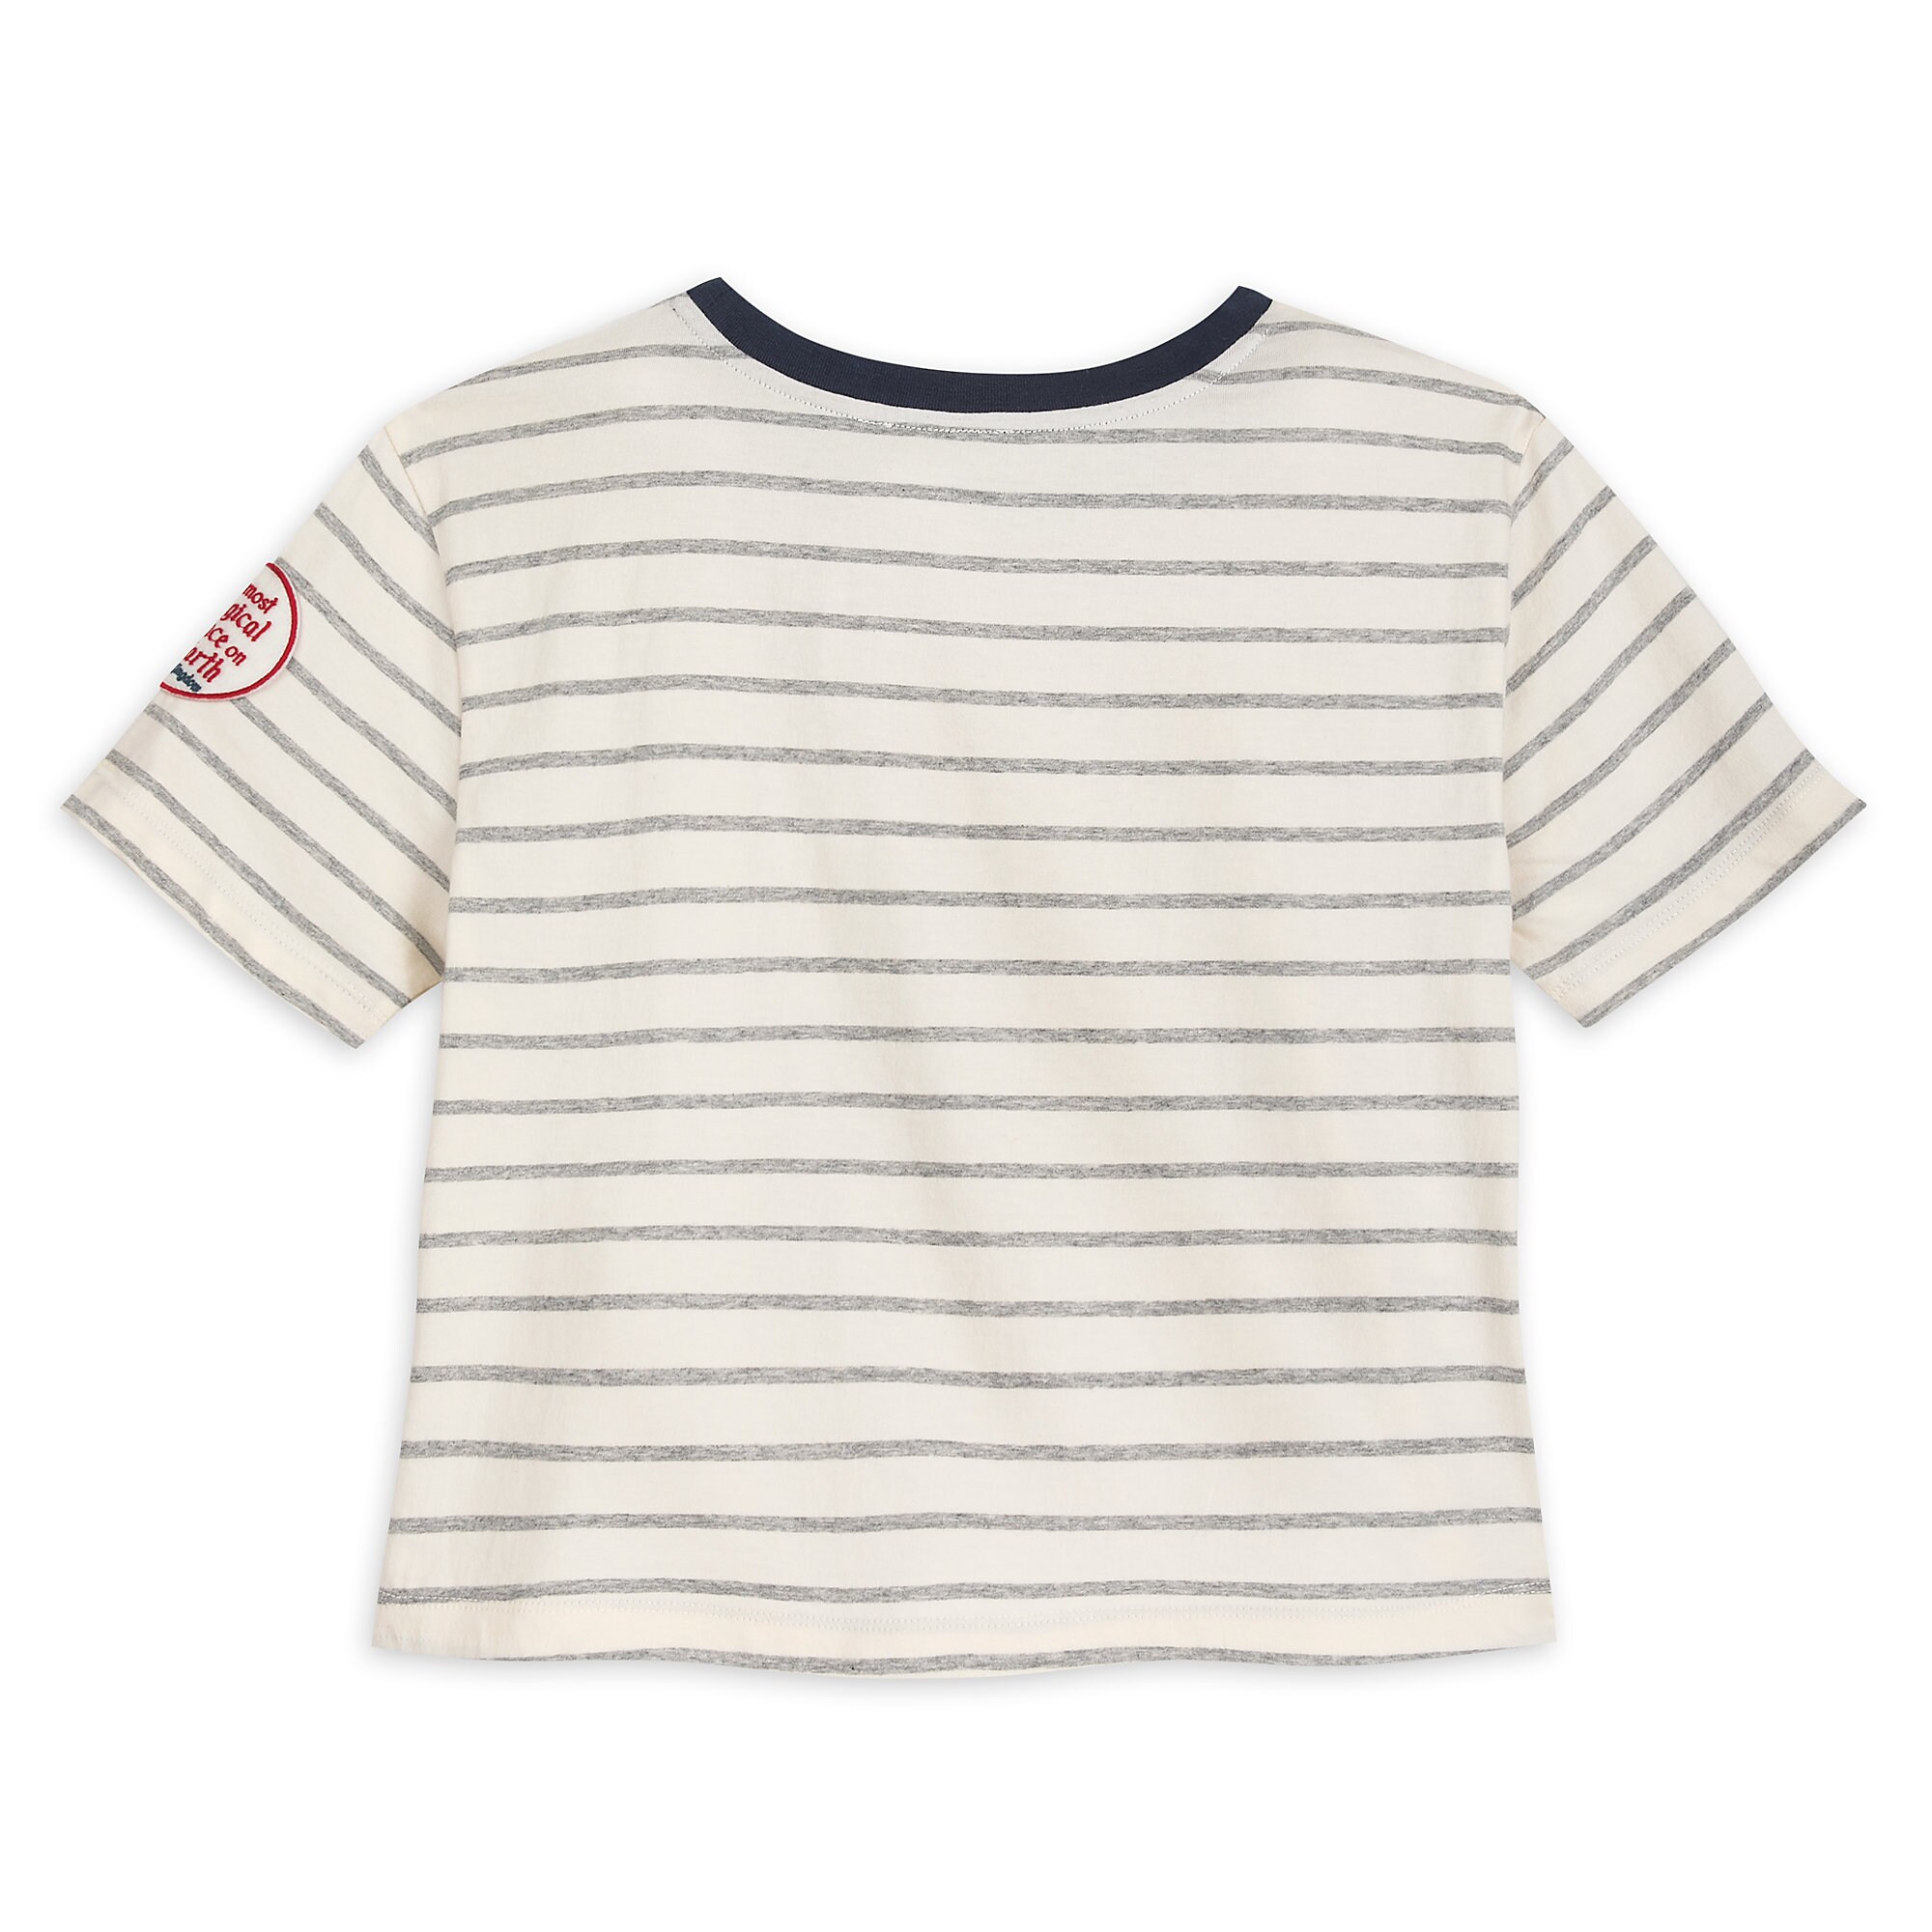 Fantasyland Castle Striped T-shirt for Girls by Junk Food - Walt Disney World